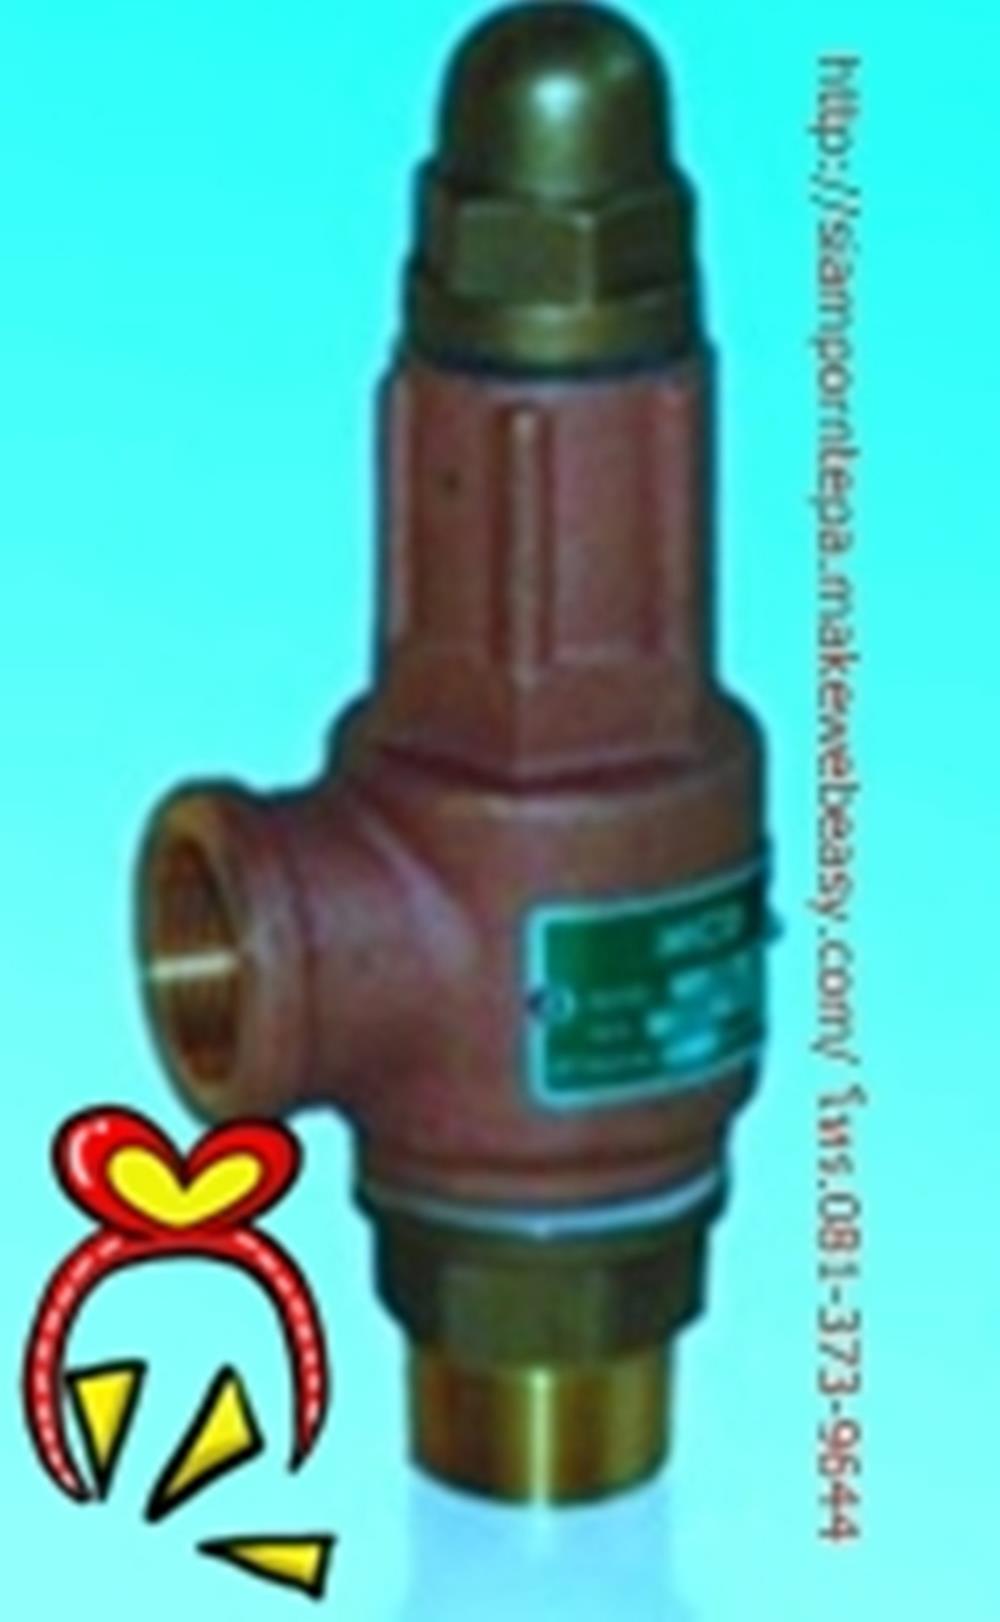 A3W-06 "Safty relief valve" ขนาด 3/4"ทองเหลือง แบบ "ไม่มีด้าม" Pressure 1-16 bar ส่งฟรีทั่วประเทศ ,A3W-06 "Safty relief valve" ,A3W-06 "Safty relief valve" 3/6",A3W-06 "Safty relief valve" ไม่มีด้าม,A3W-06 "Safty relief valve" ไม่มีด้าม 3/6",A3W-06 "Safty relief valve",Pumps, Valves and Accessories/Valves/Safety Relief Valve